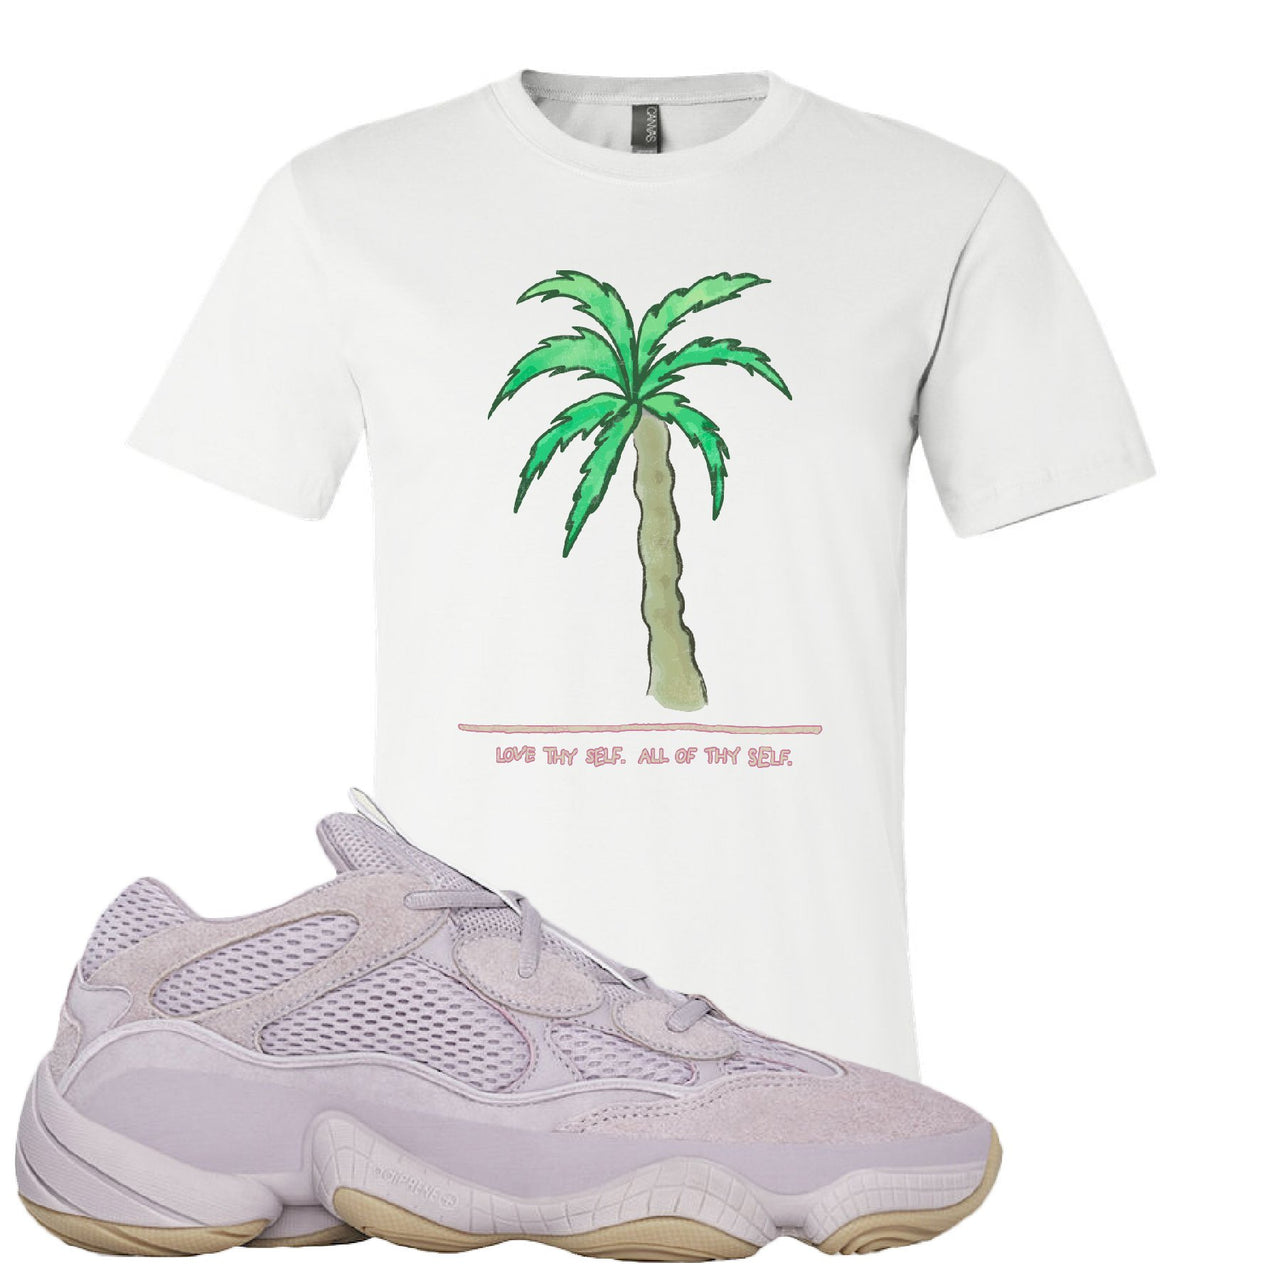 Yeezy 500 Soft Vision Love Thyself Palm White Sneaker Hook Up Women's T-Shirt